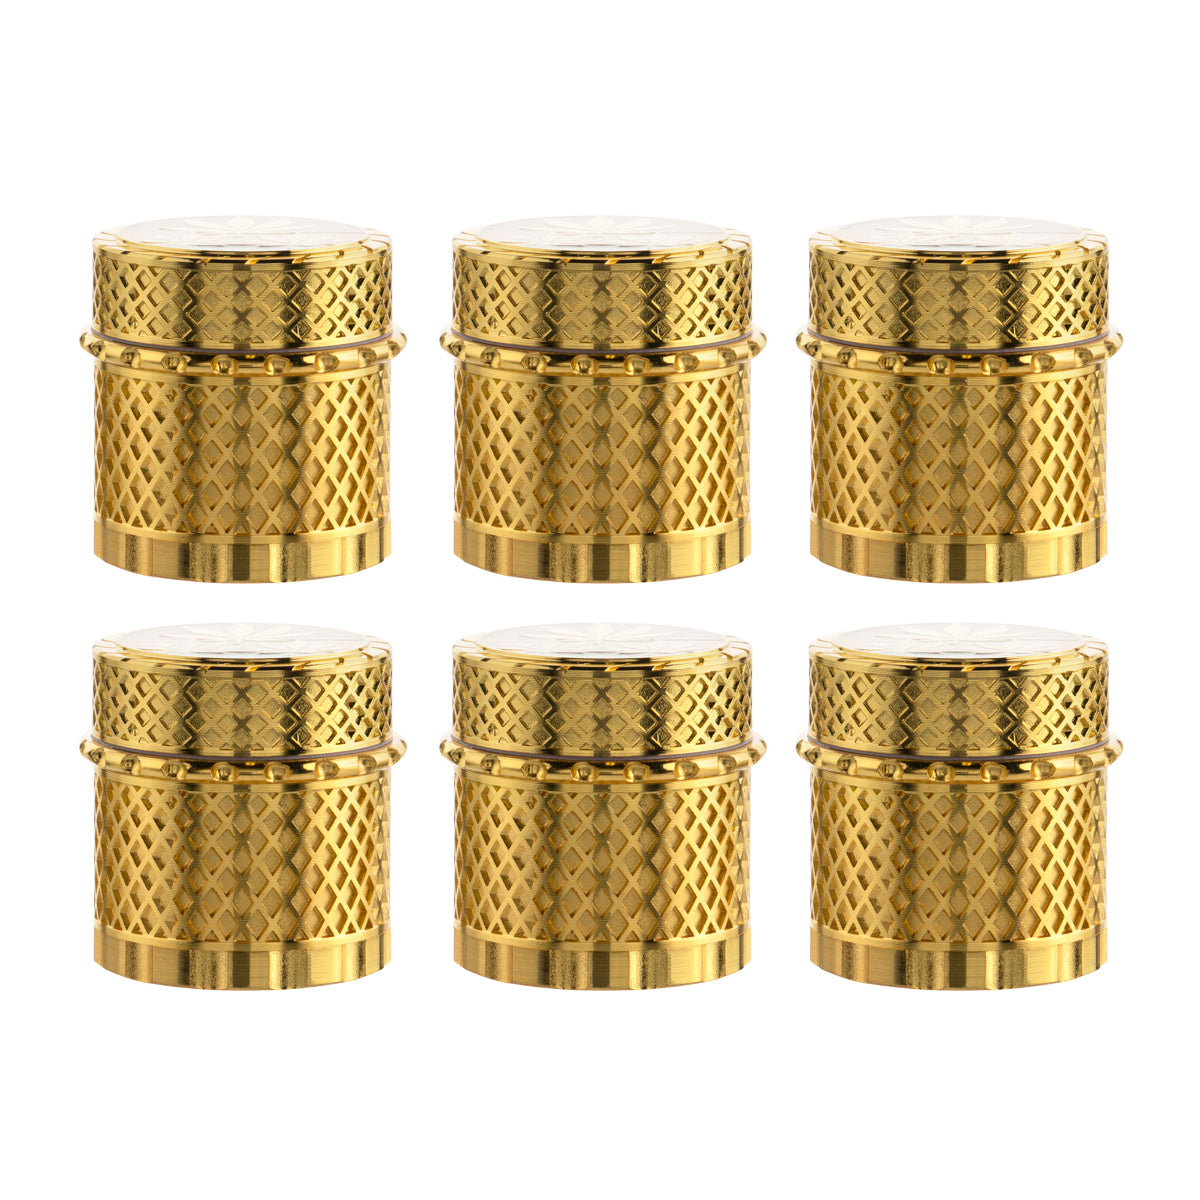 Grinder | 'Retail Display' Gold Grinder w/ Rasta Leaf | 4 Piece - 545mm - 12 Count Grinder Biohazard Inc   